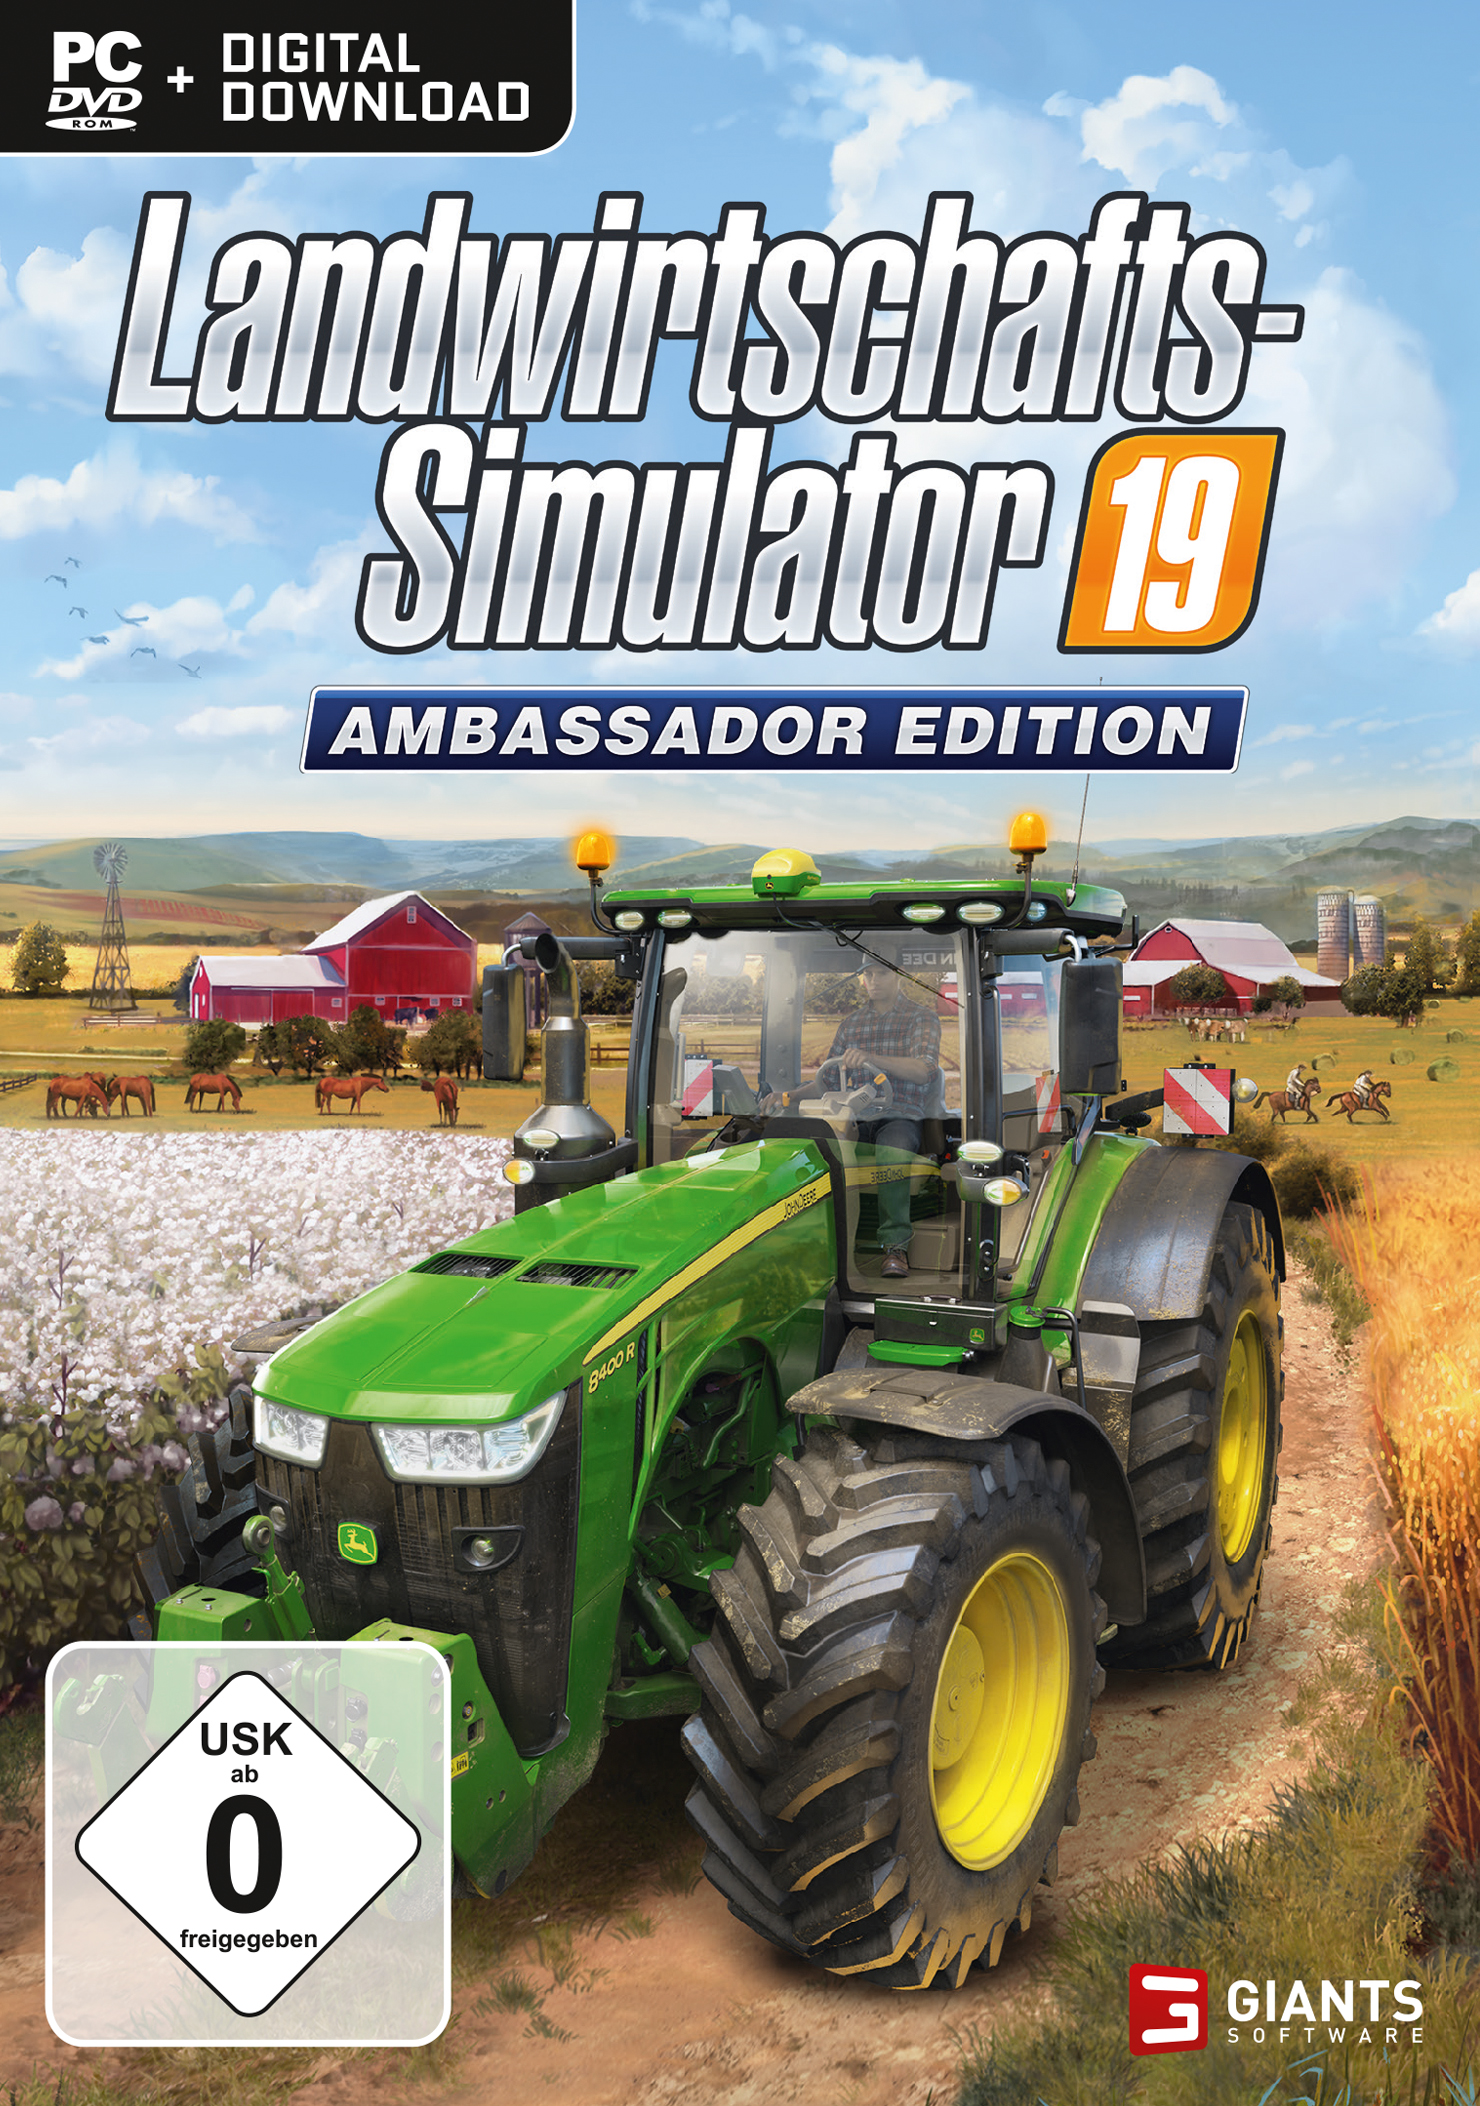 Landwirtschafts-Simulator 19 Ambassador